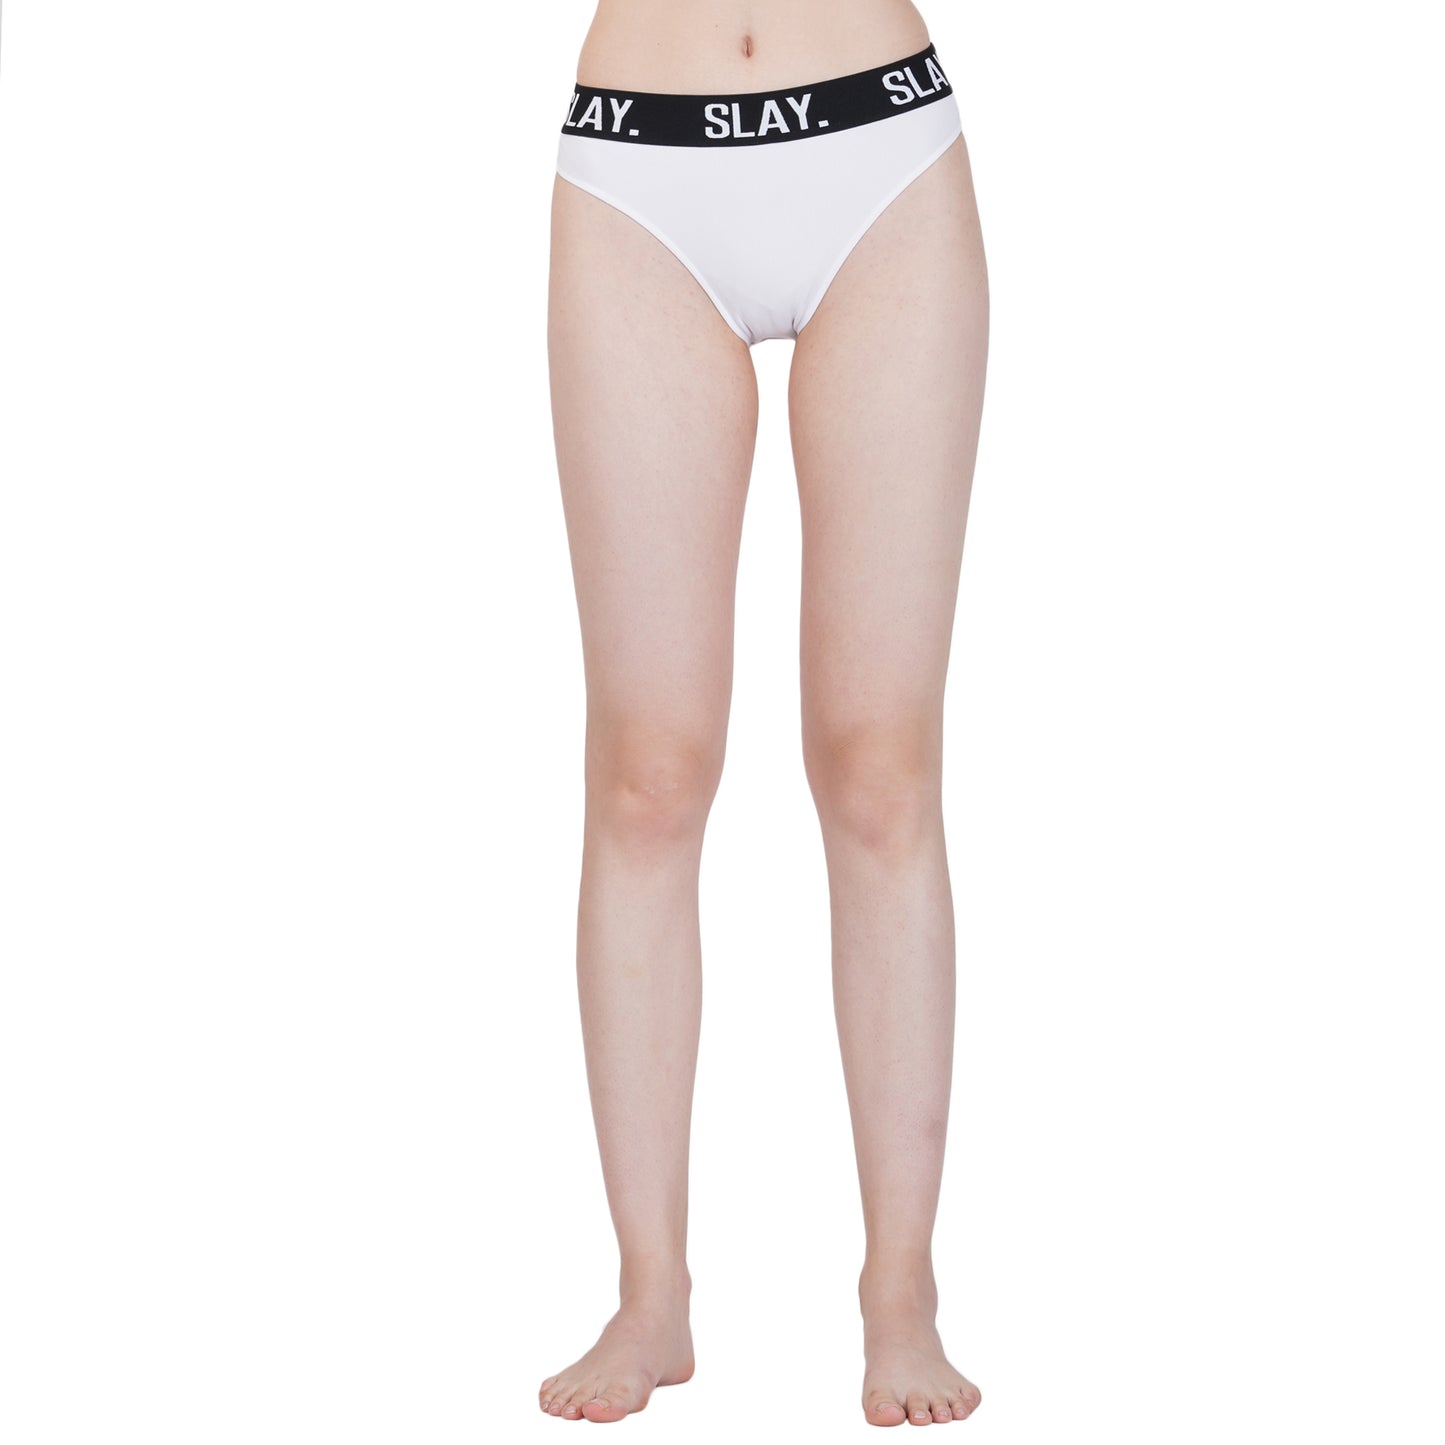 SLAY. Women's Underwear Lingerie Modern Sports Bra and Panty Set White